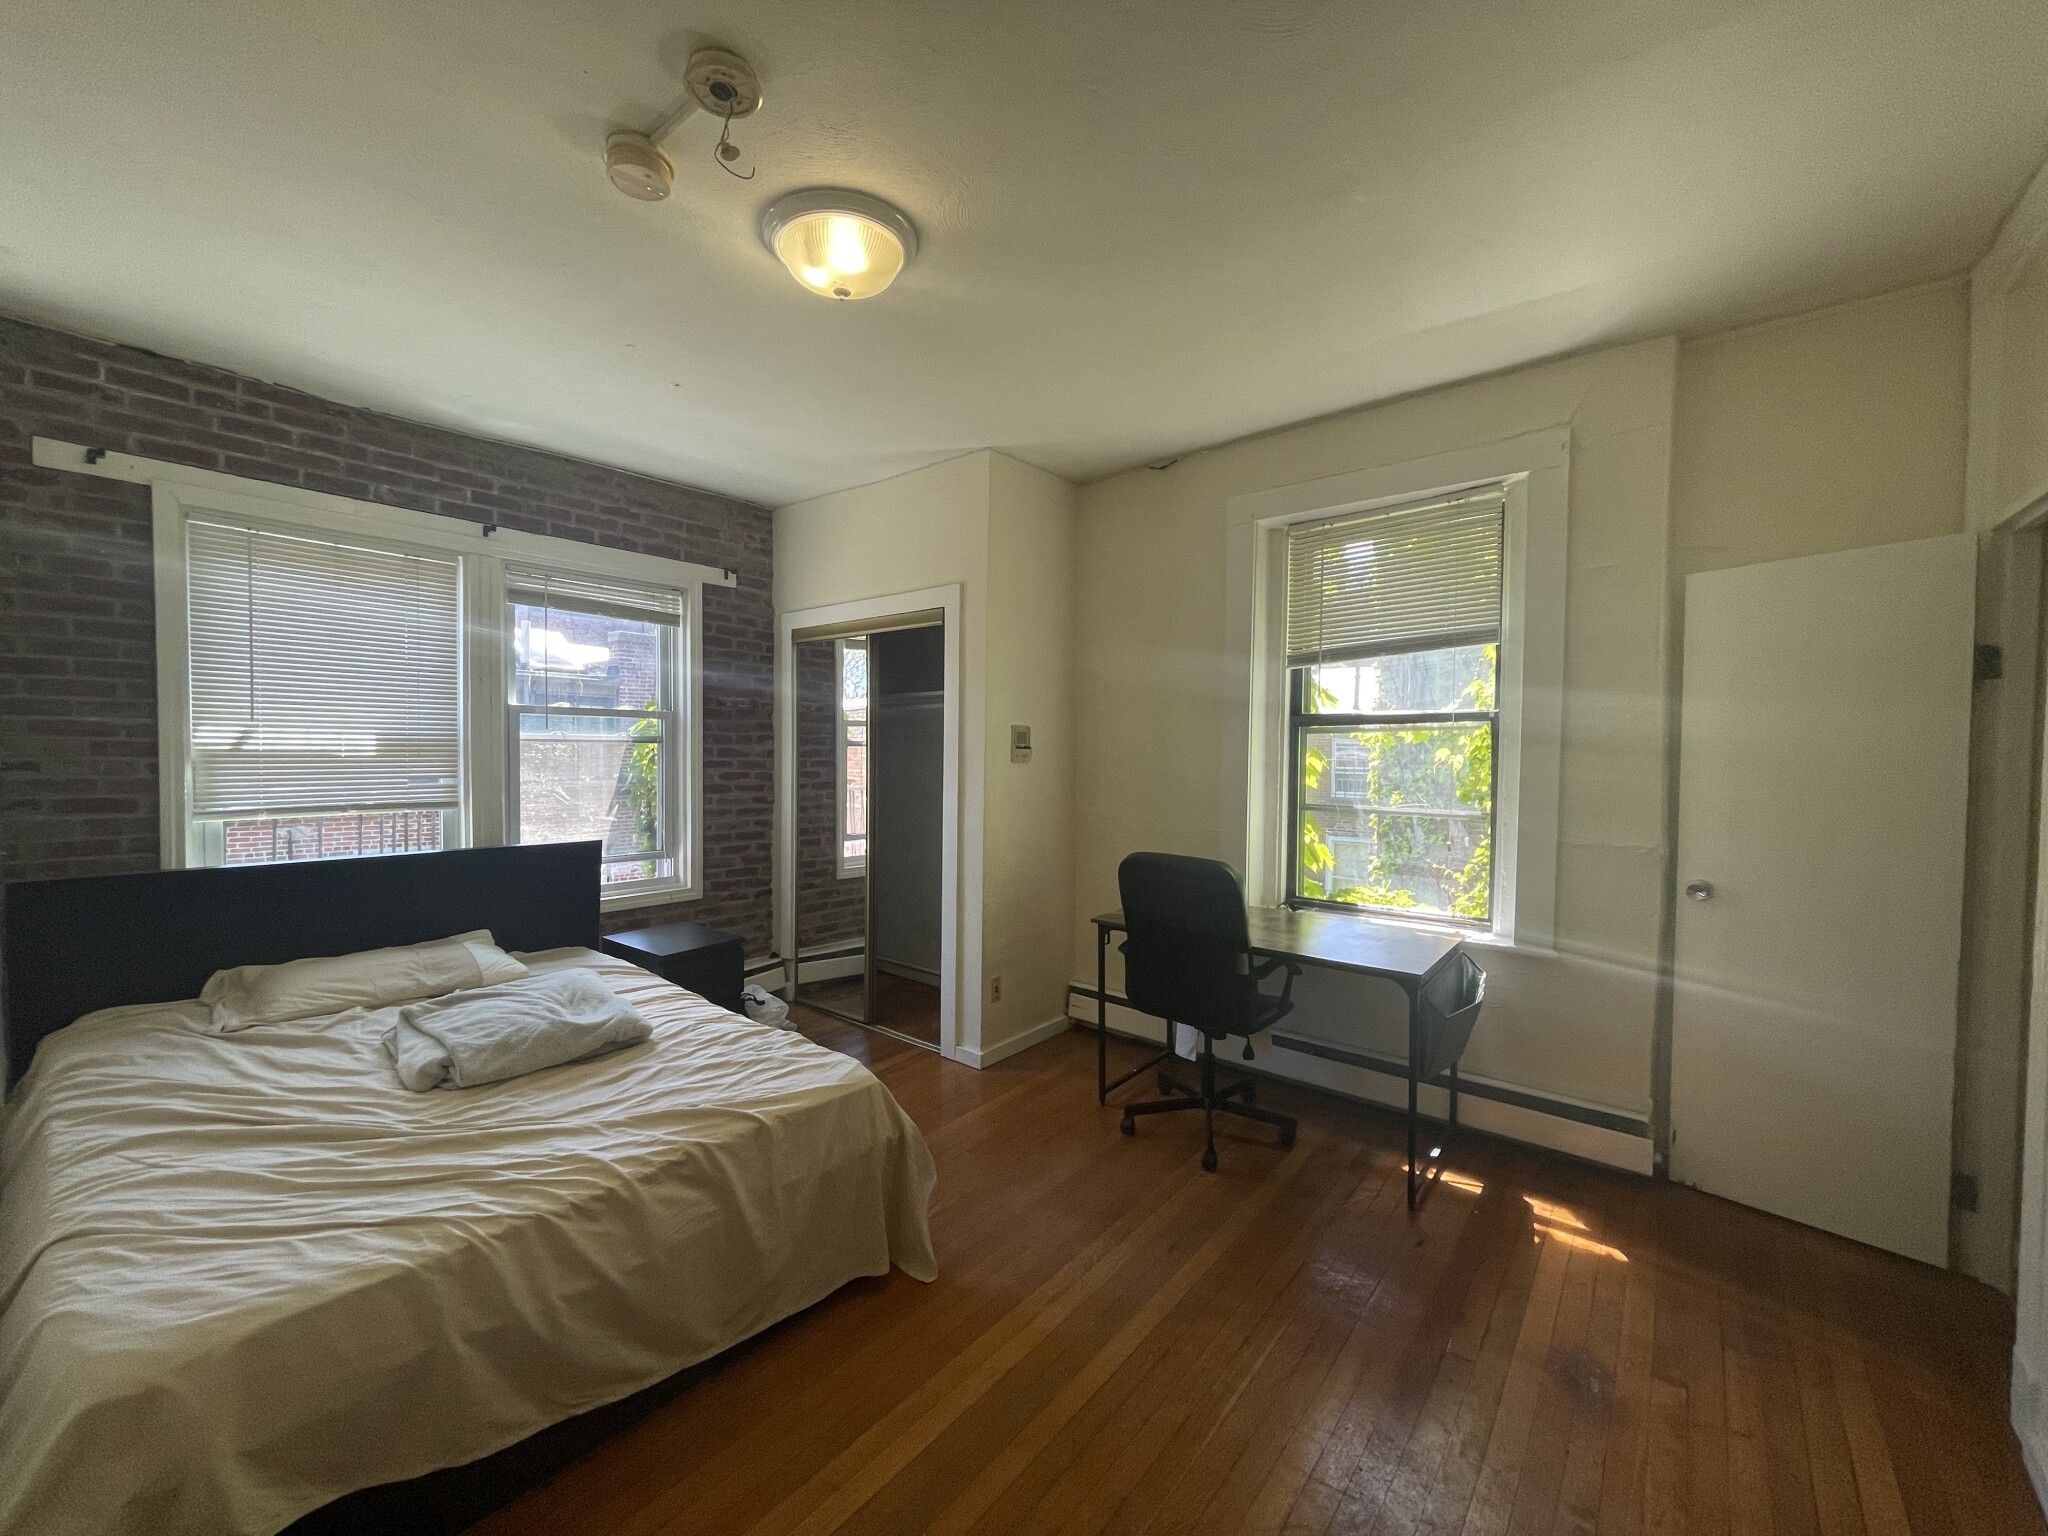 Photos of apartment on Staniford St.,Boston MA 02114